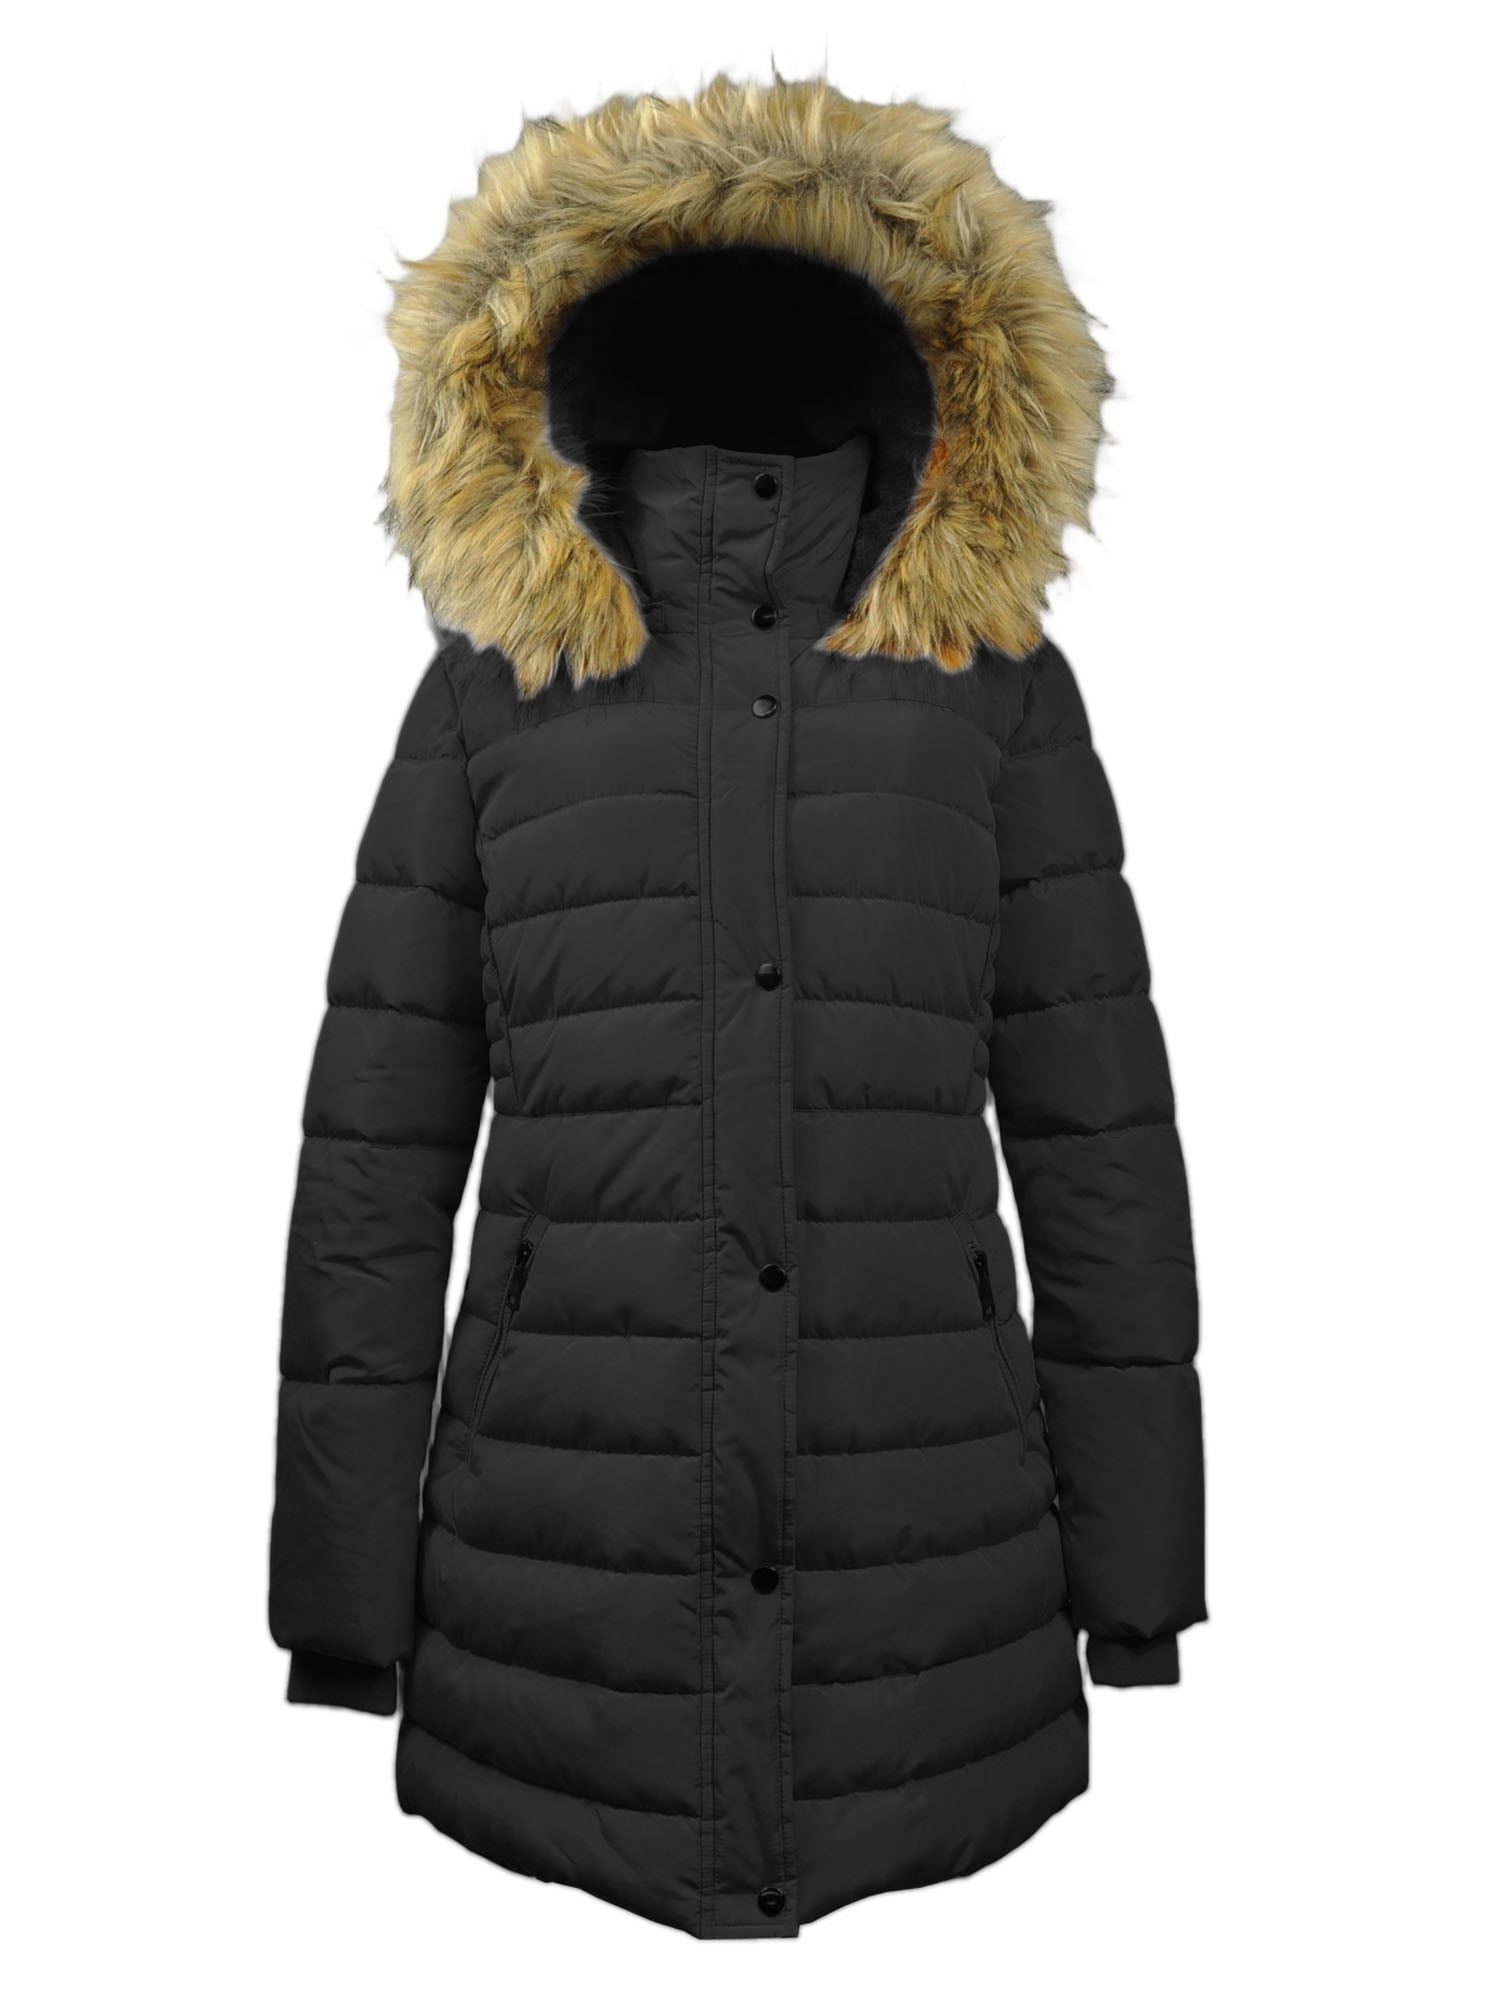 Fleece Lined Winter Puffer Coat for Women Warm Quilted Winter Jacket ...